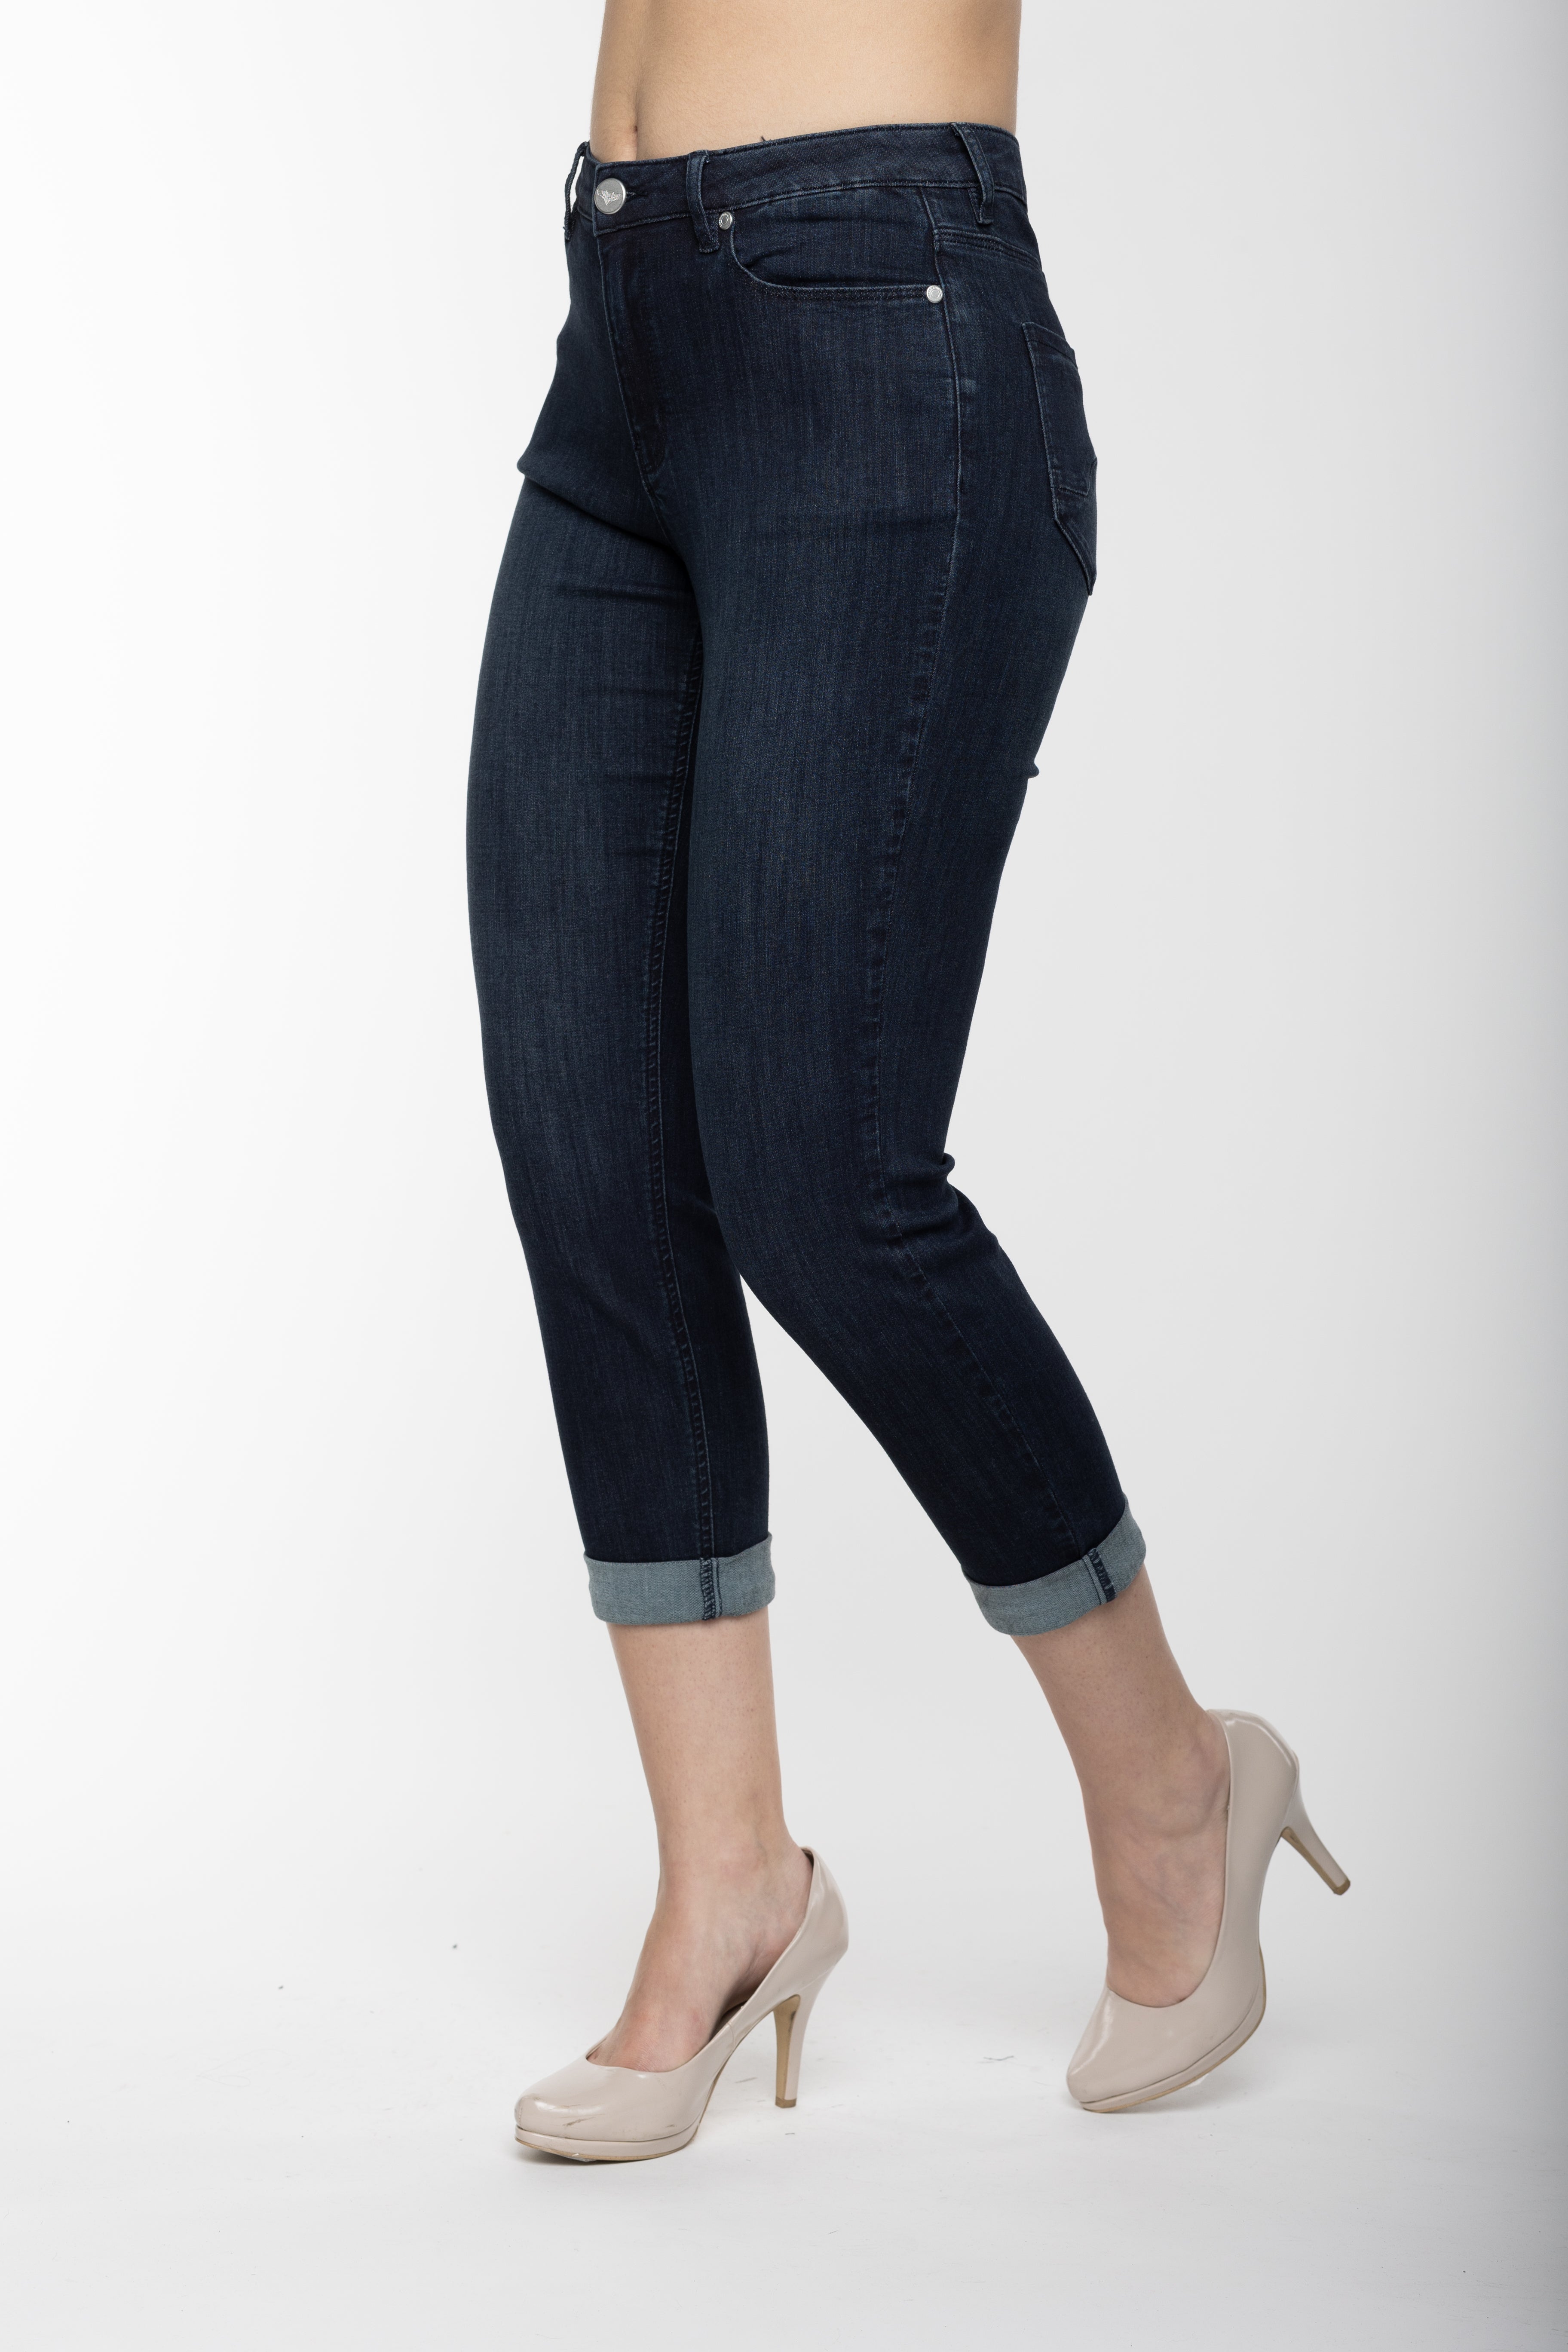 Carreli Jeans® | Premium Angela Fit Boyfriend fit in Blasted Rinse Wash